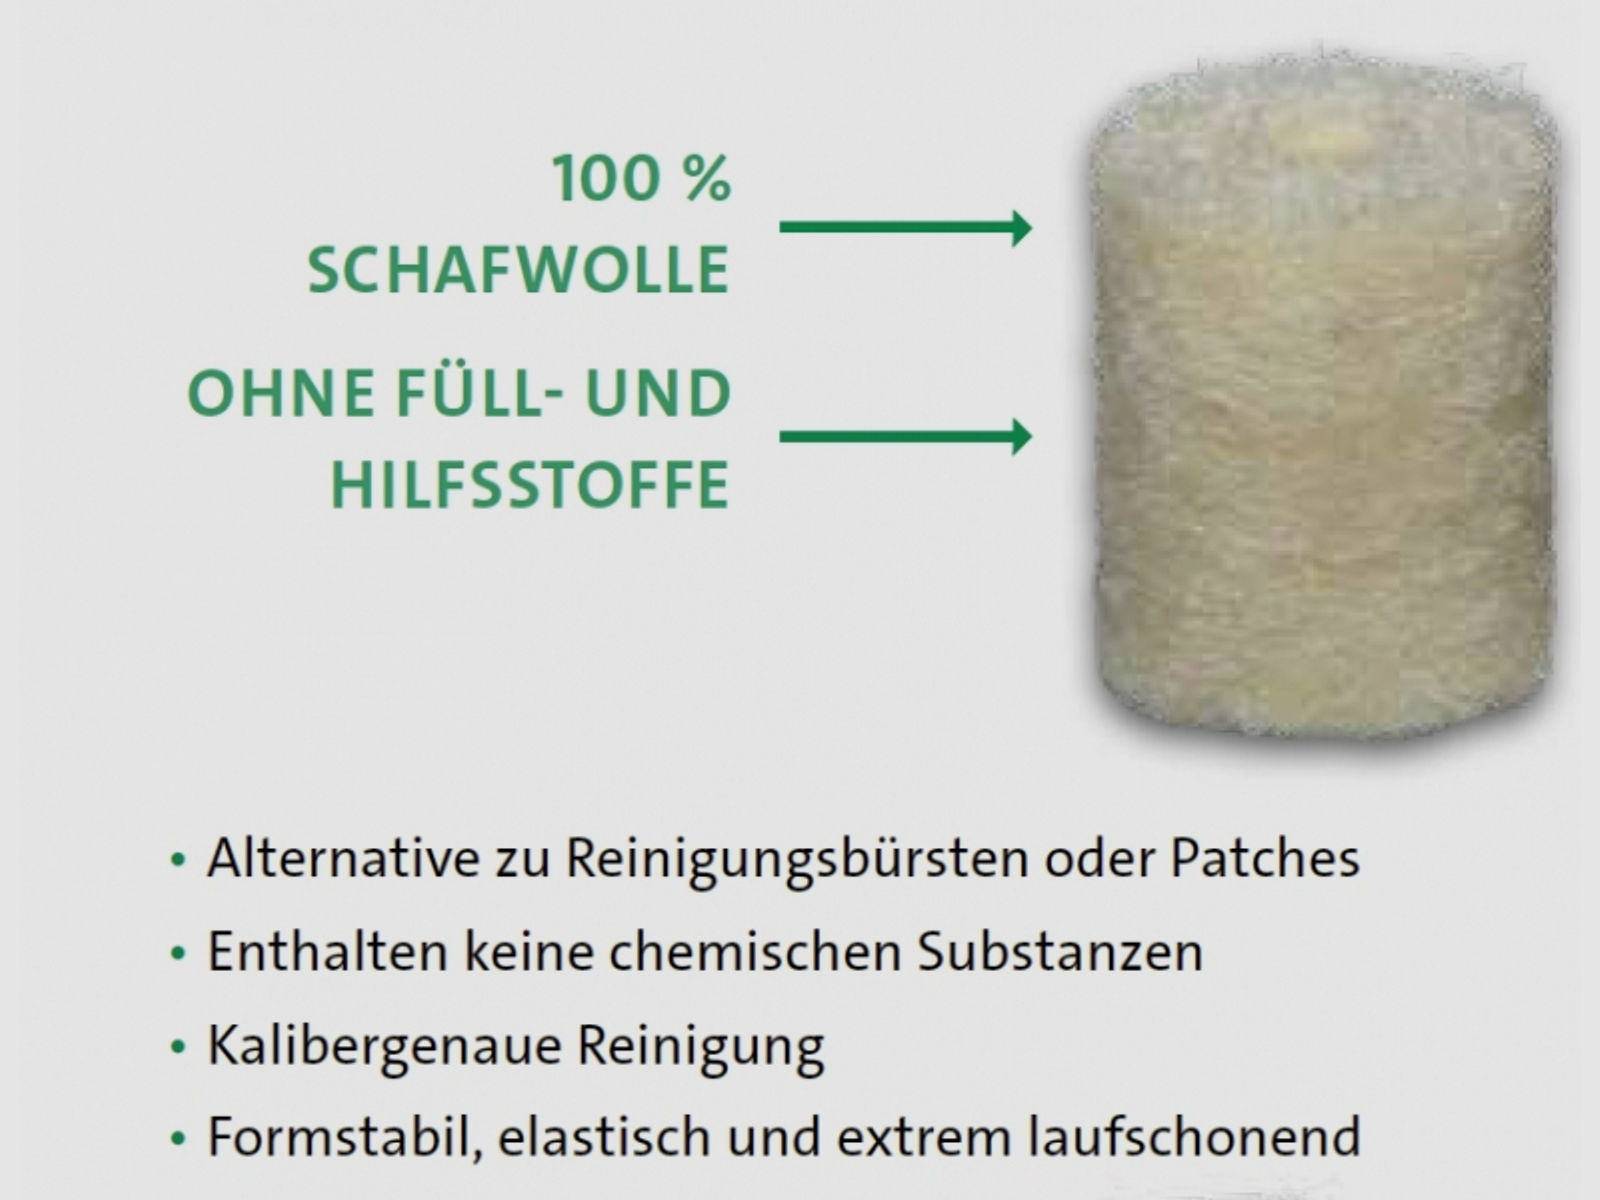 60x BALLISTOL Reinigungsfilze/Filzreiniger KLASSIK Cal. 17(4mm/4,5mm)|100%Schafwolle;formstabil